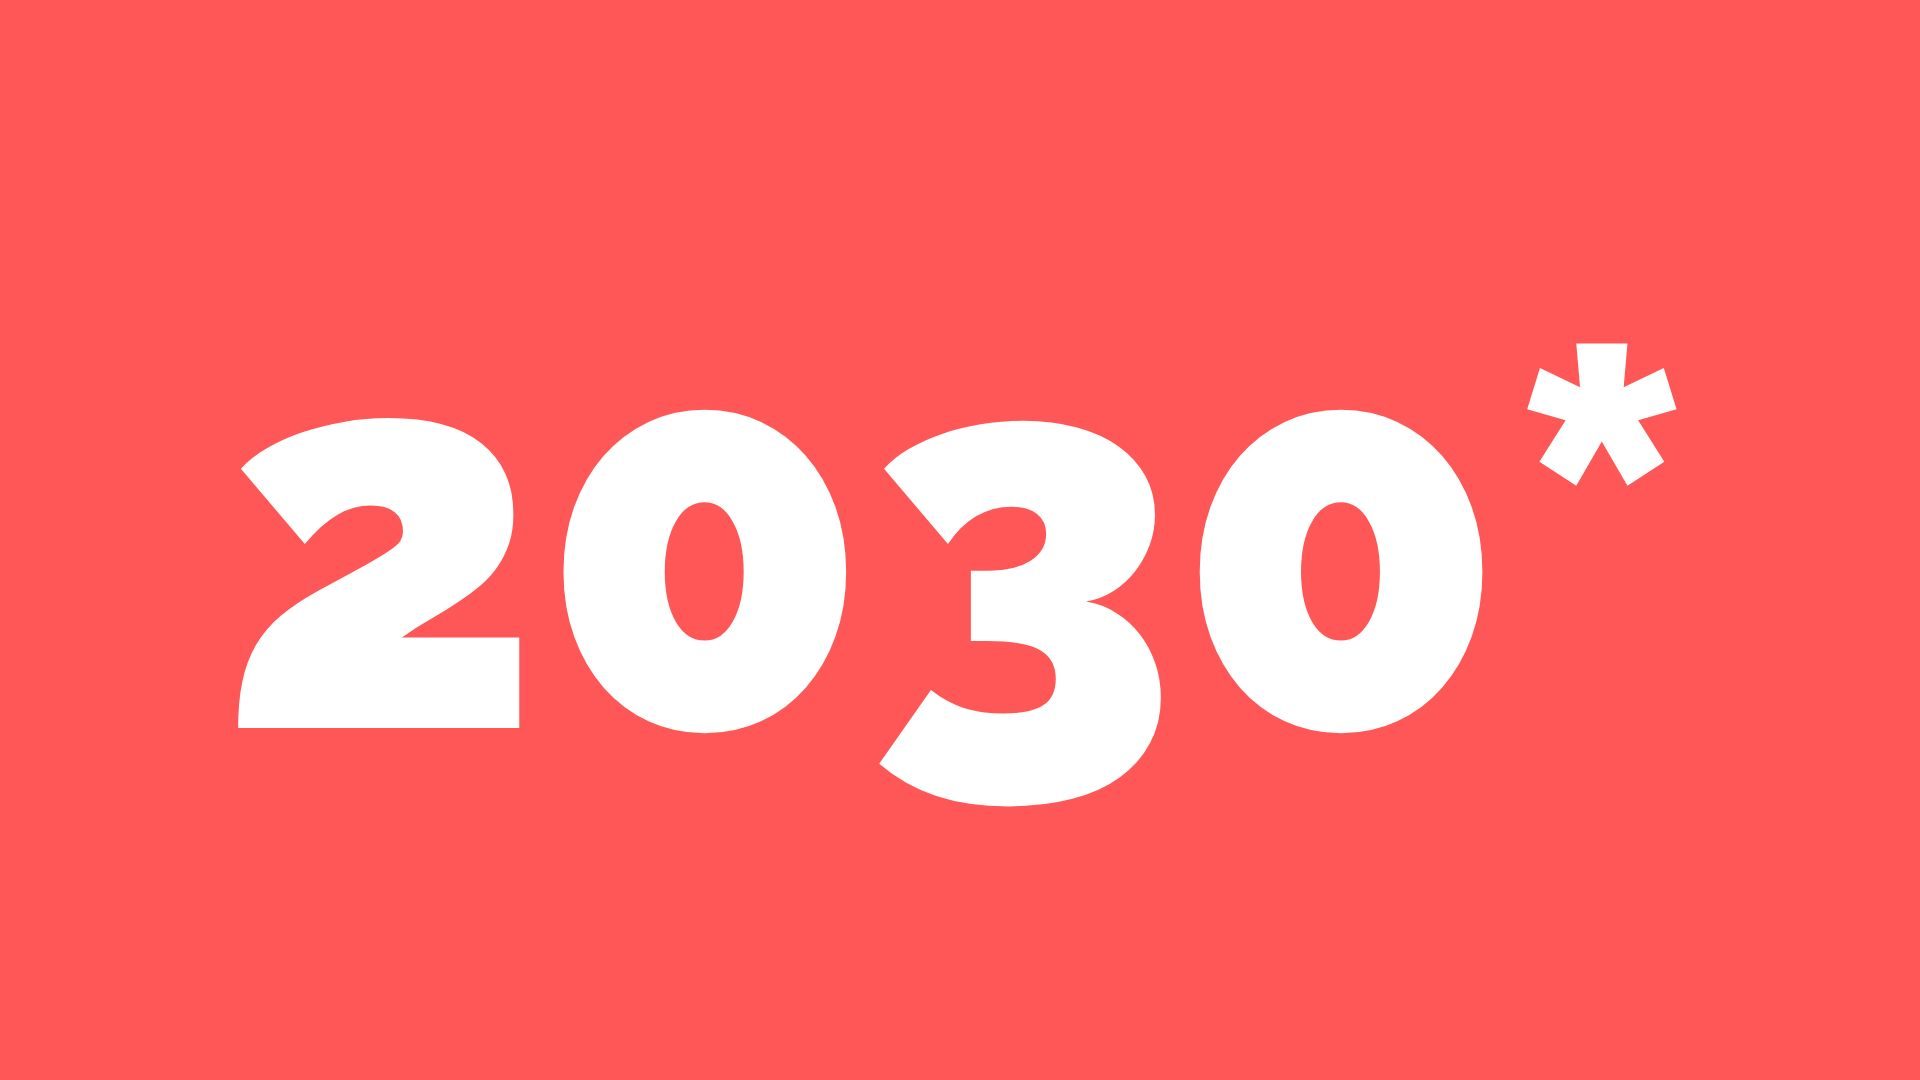 2030* User Feedback banner image